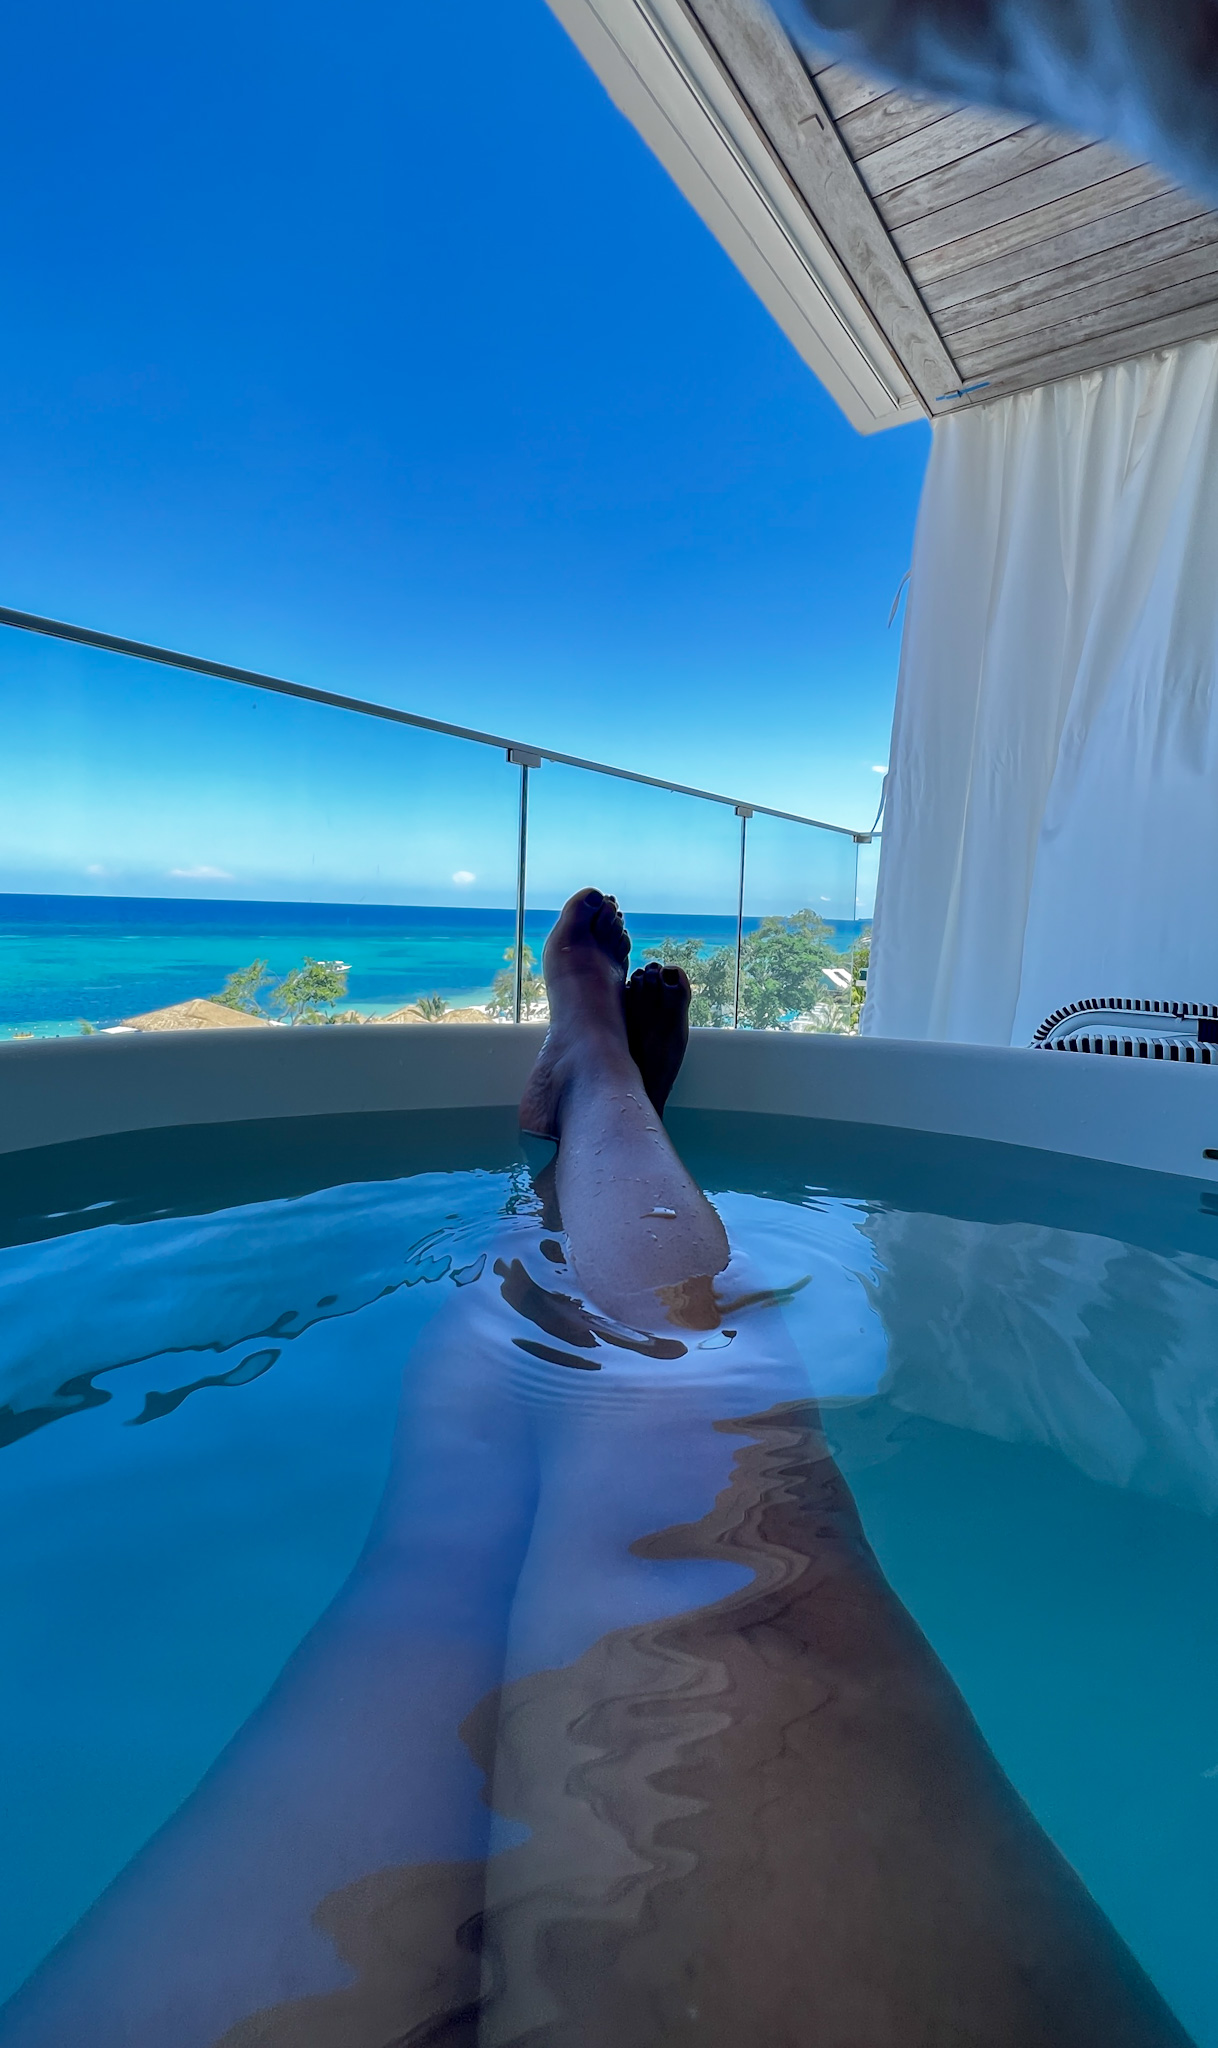 patranila's legs in a tub on a balcony overlooking the sea